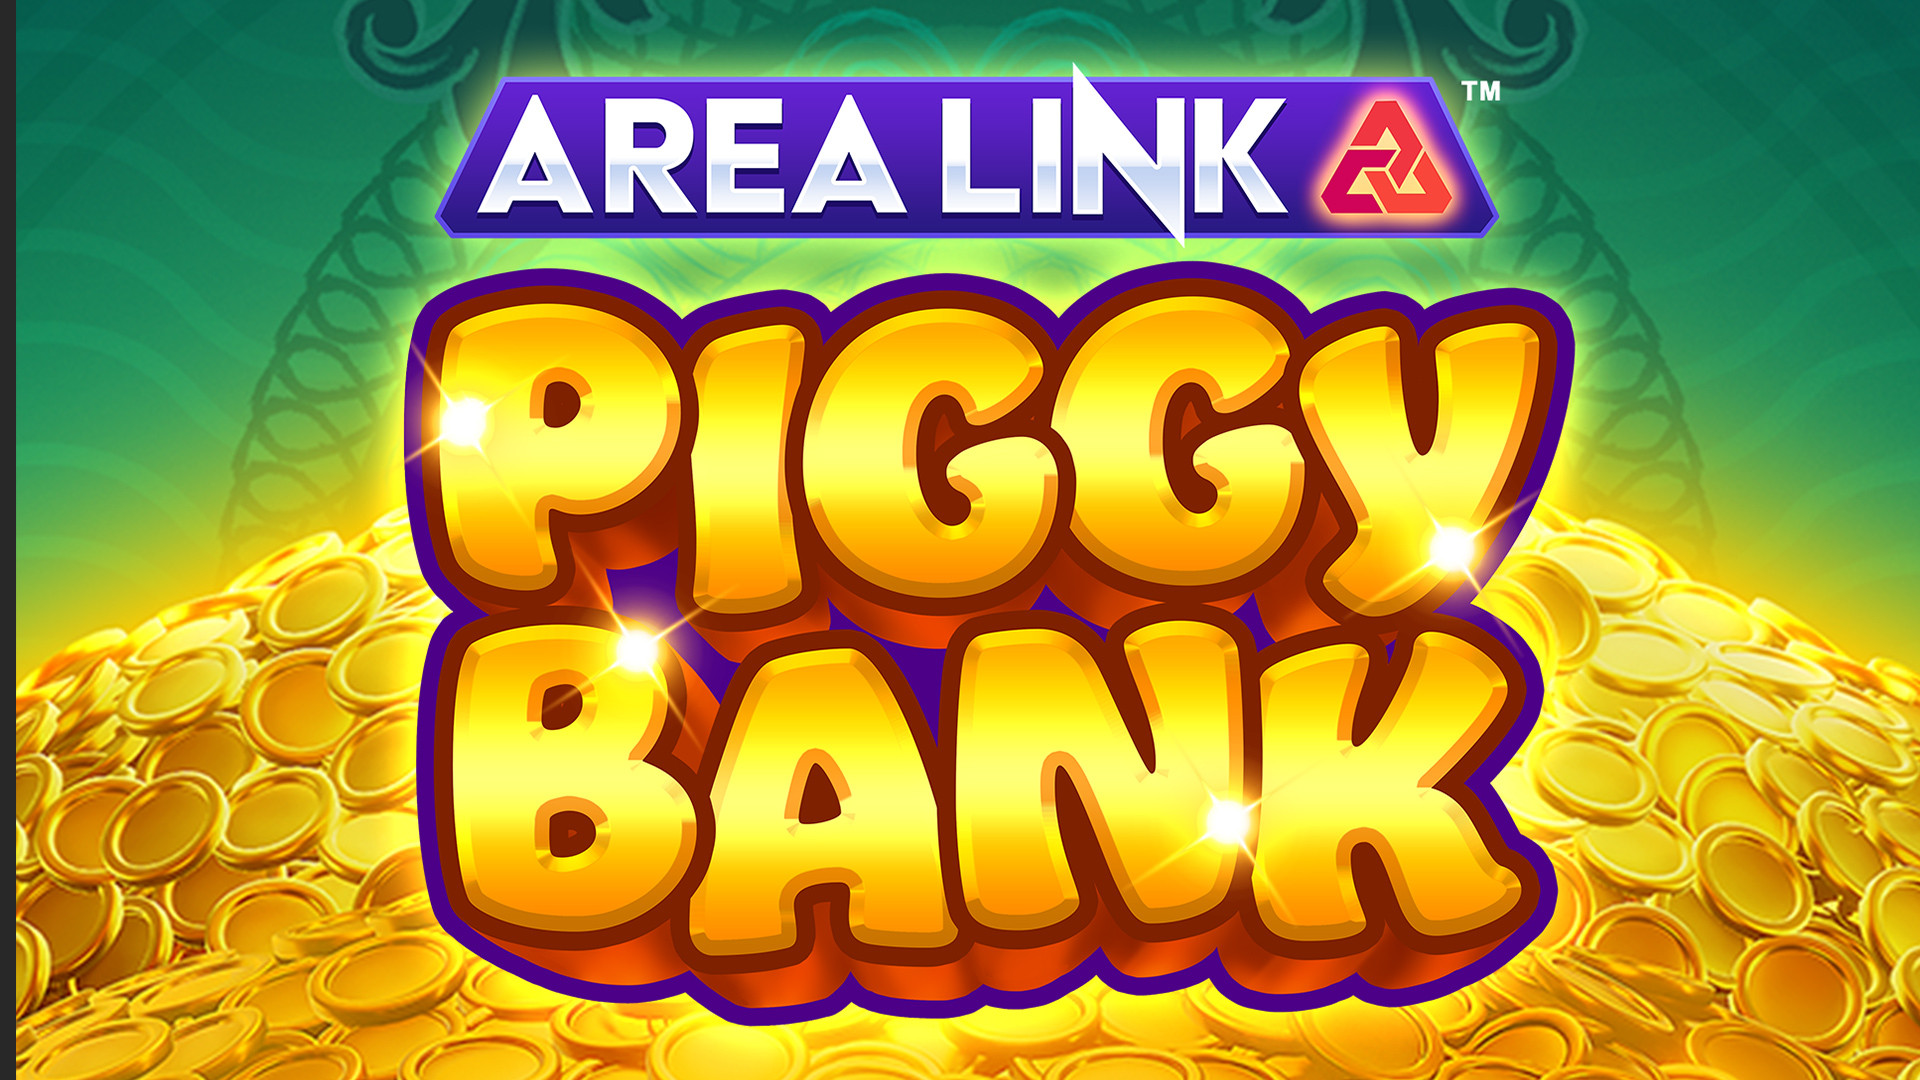 Area Link Piggy Bank